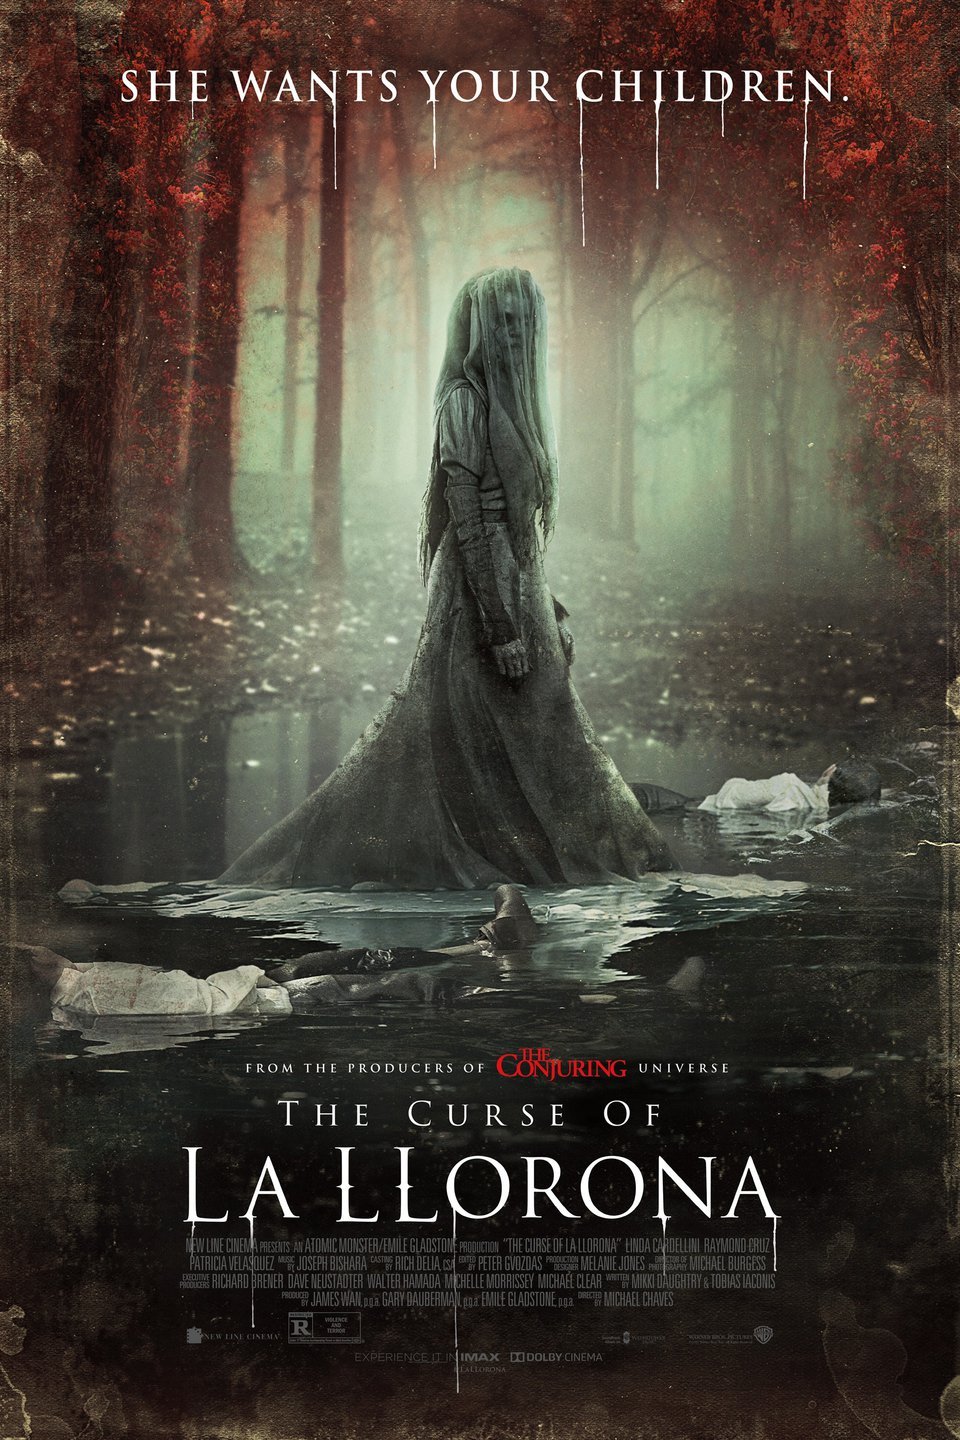 [MINI Super-HQ] The Curse of La Llorona (2019) คำสาปมรณะจากหญิงร่ำไห้ [1080p] [พากย์ไทย 5.1 + เสียงอังกฤษ DTS] [บรรยายไทย + อังกฤษ] [เสียงไทย + ซับไทย] [OPENLOAD]